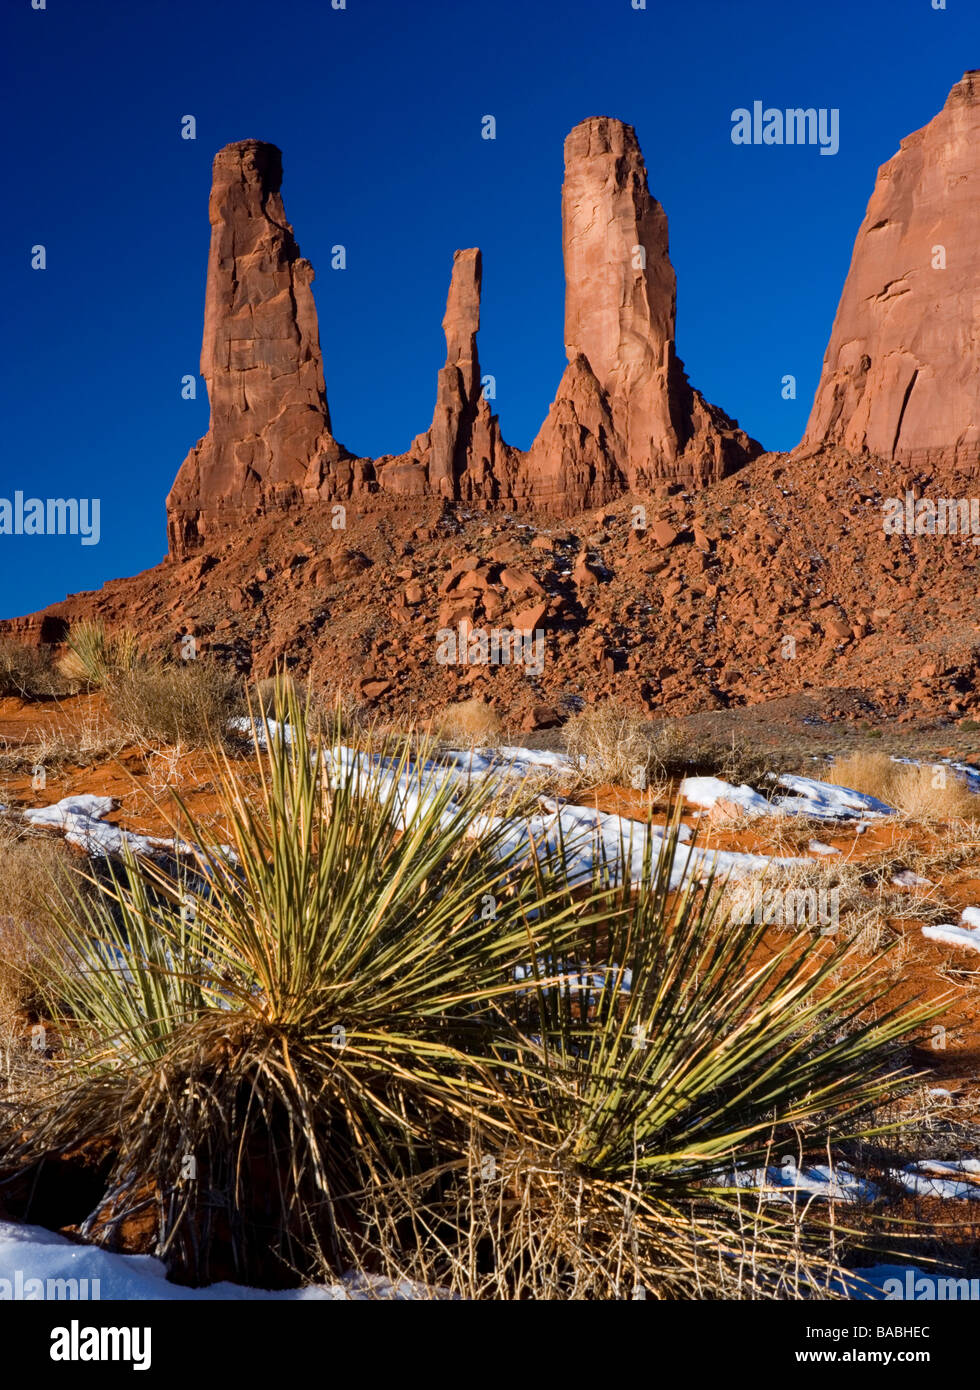 Monument Valley Navajo Tribal Park in Arizona, USA Stockfoto